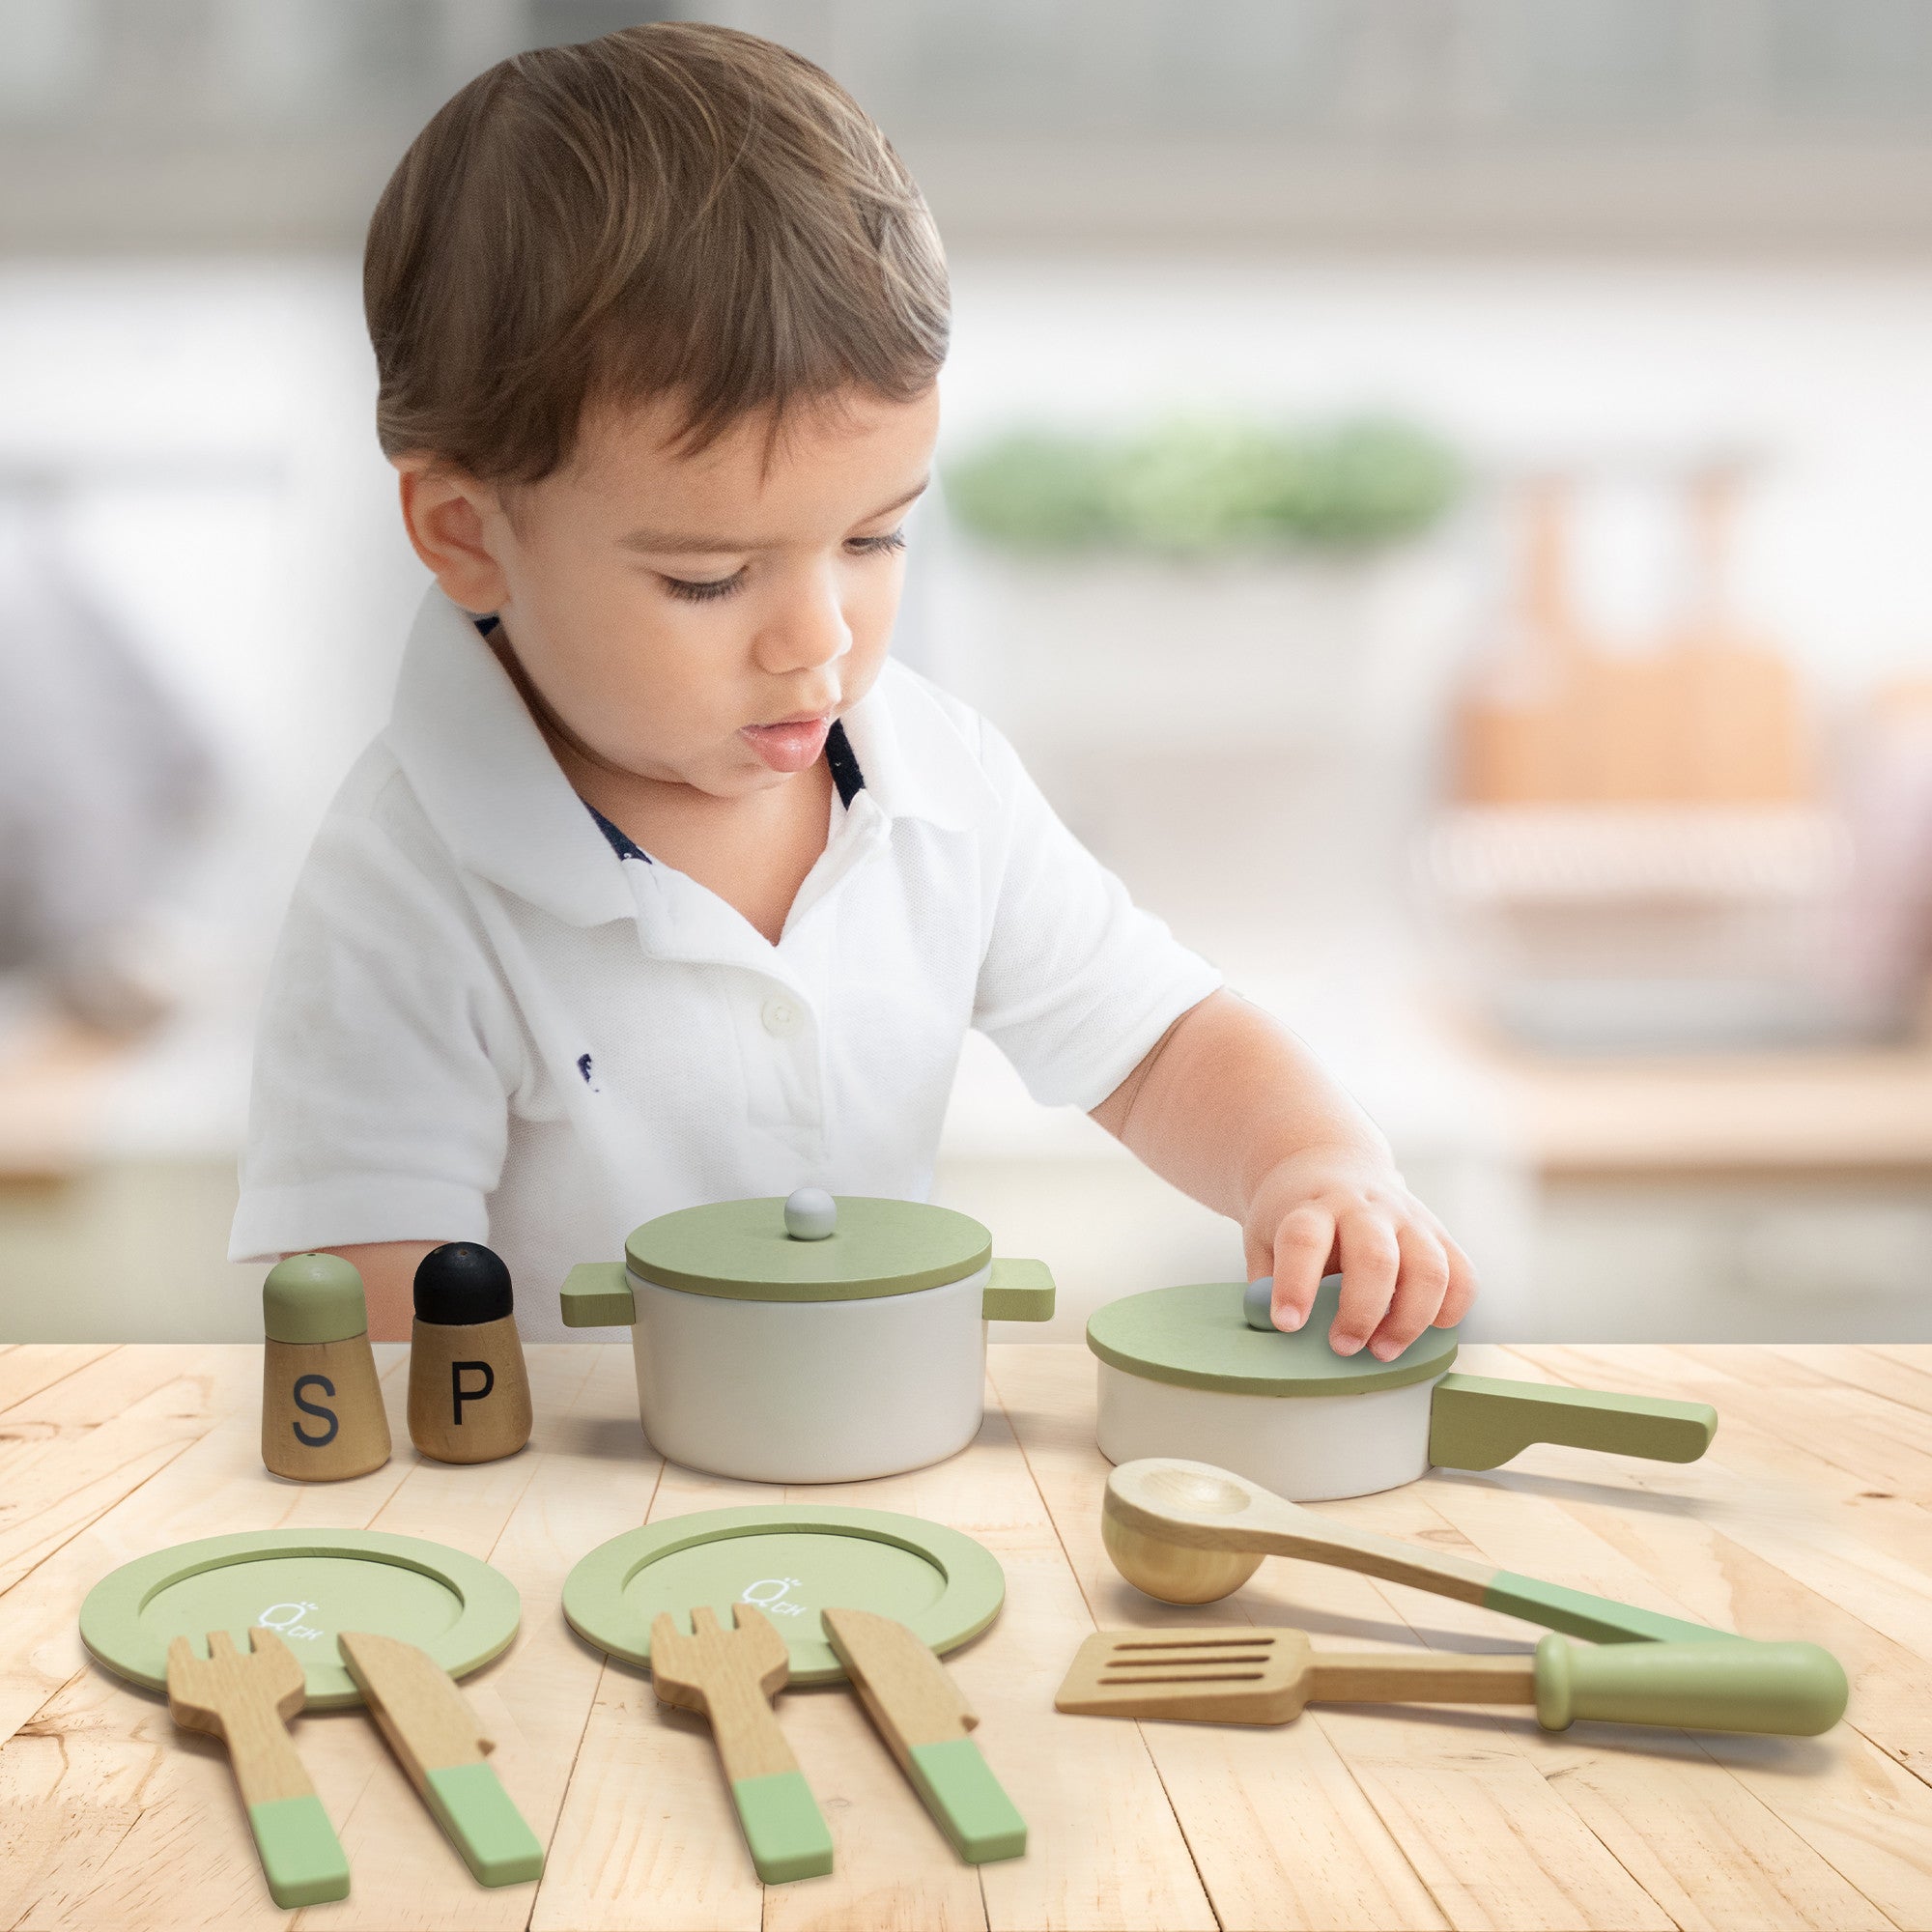 Teamson Kids Little Chef Frankfurt Wooden Cookware Play Kitchen Accessories, Green